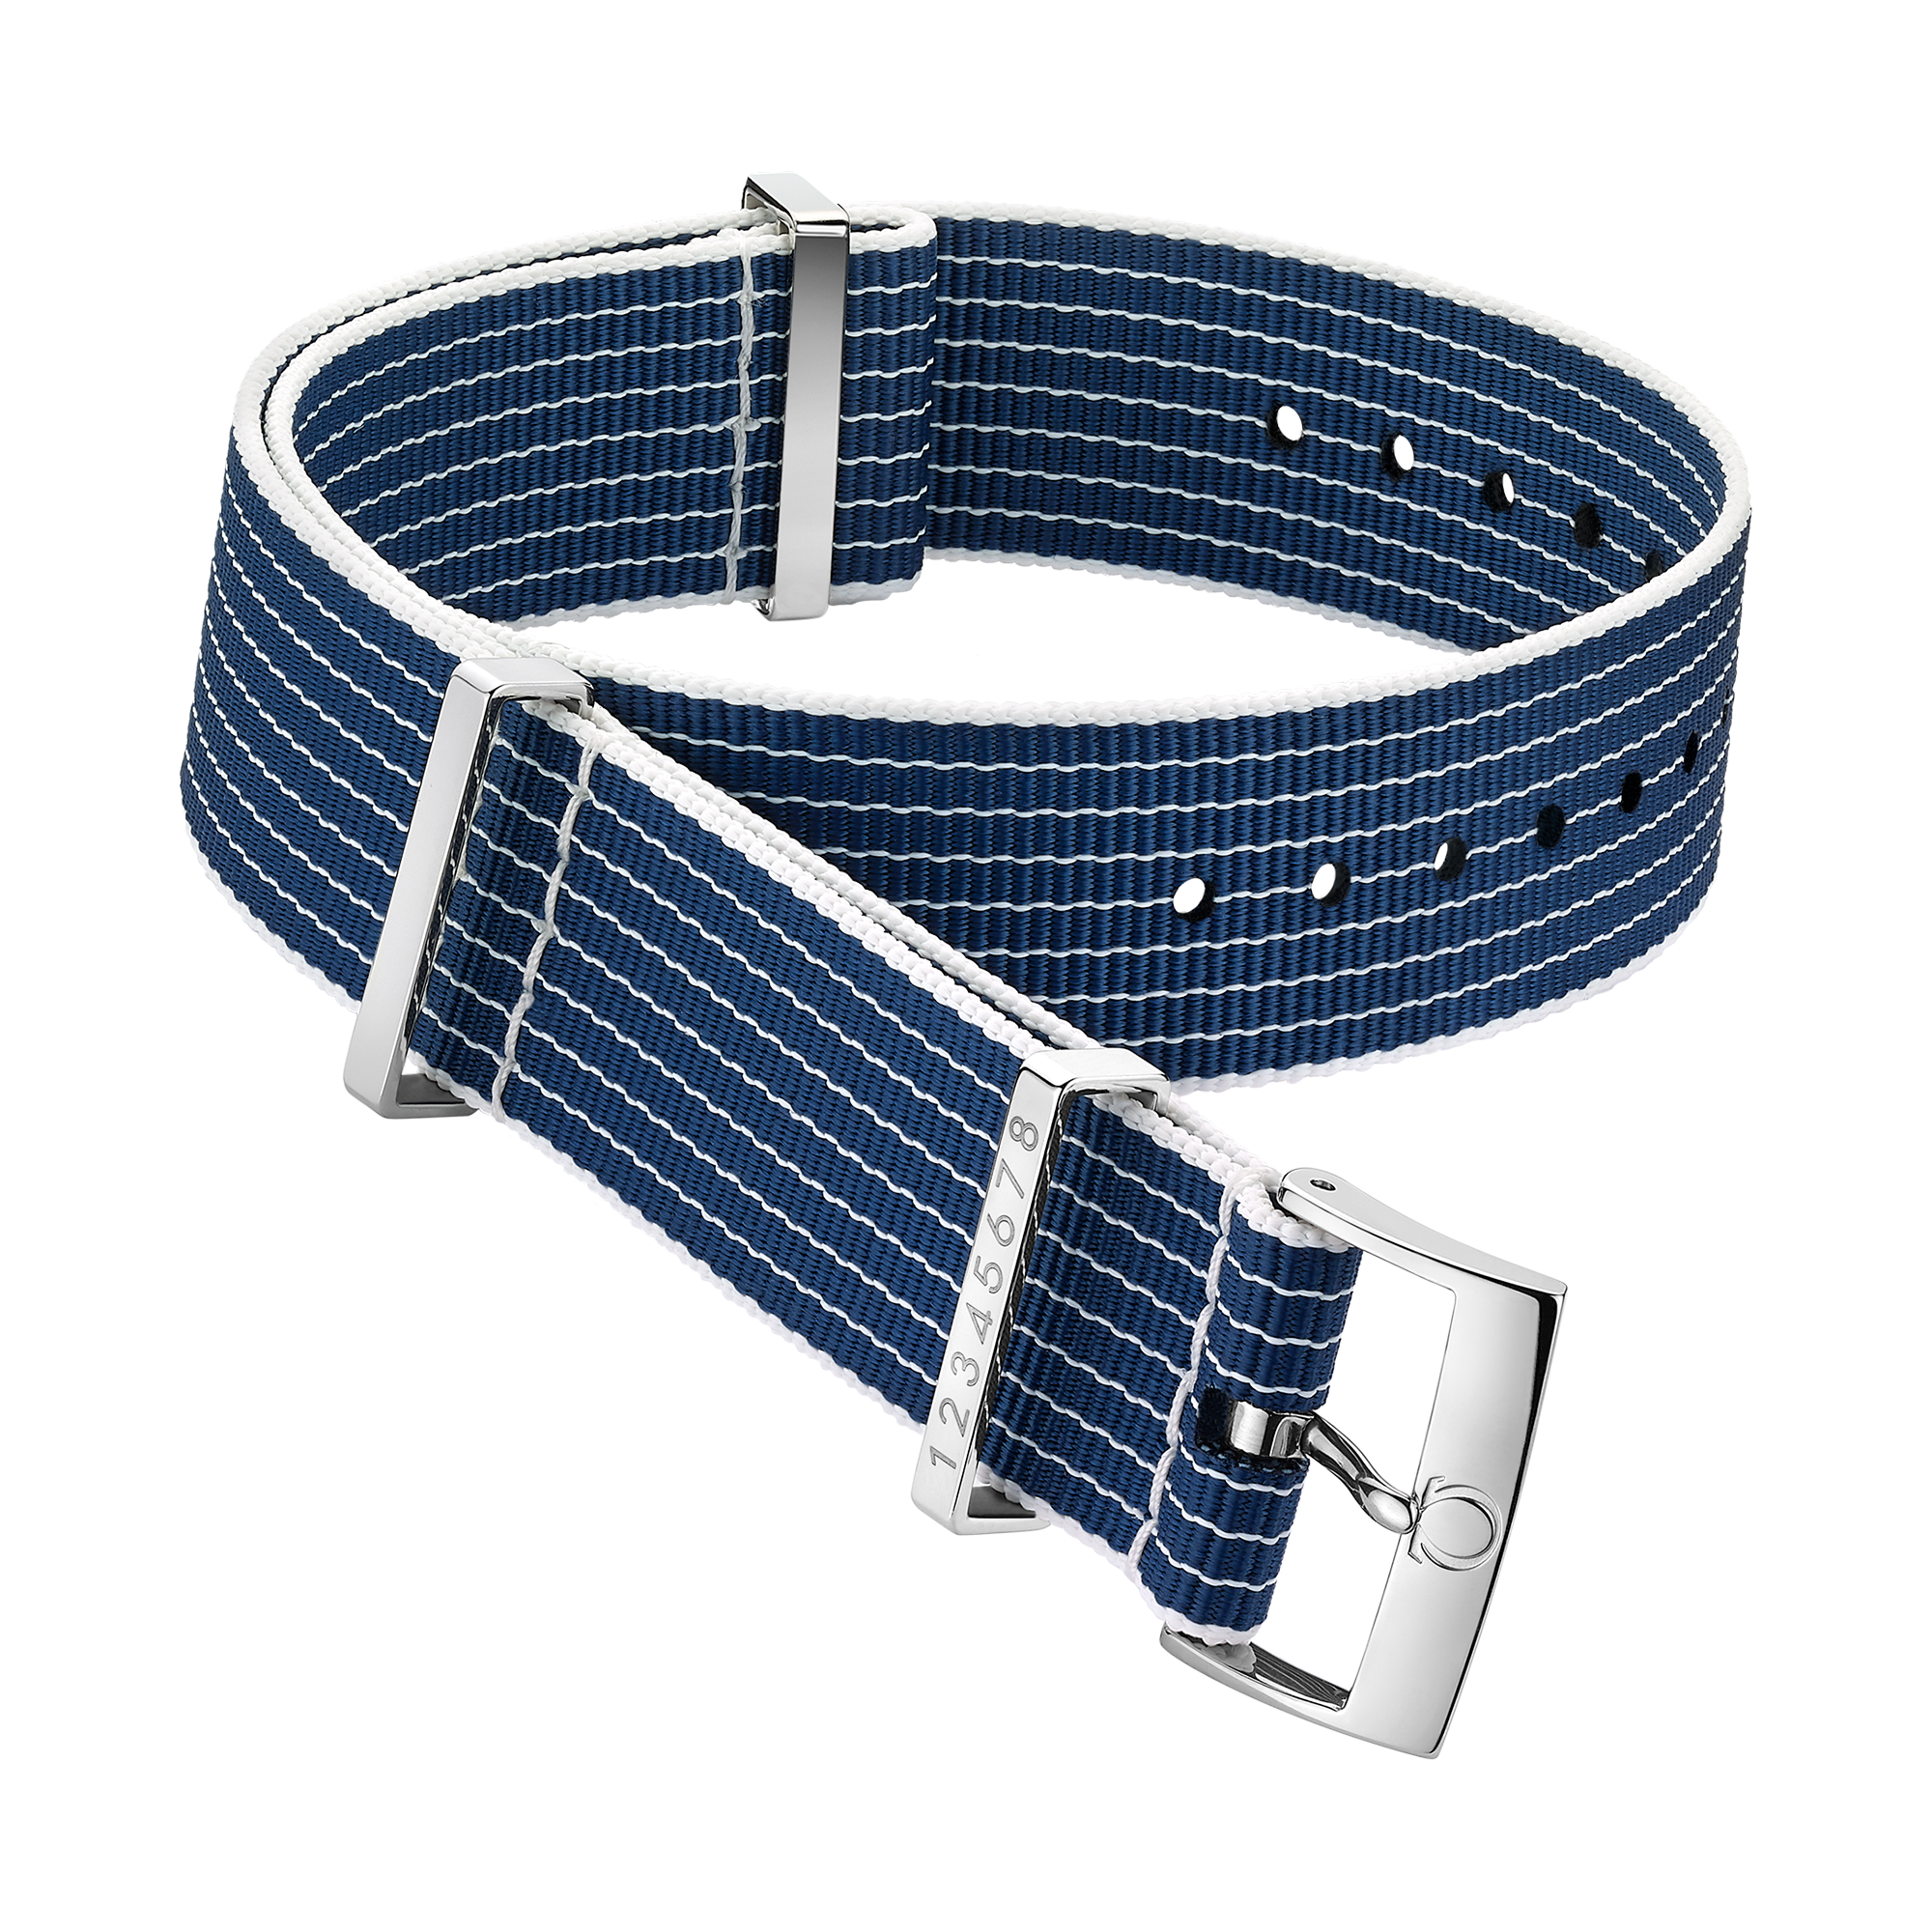 NATO strap - Polyamide striped blue and white racetrack-style strap - 031CWZ005945w